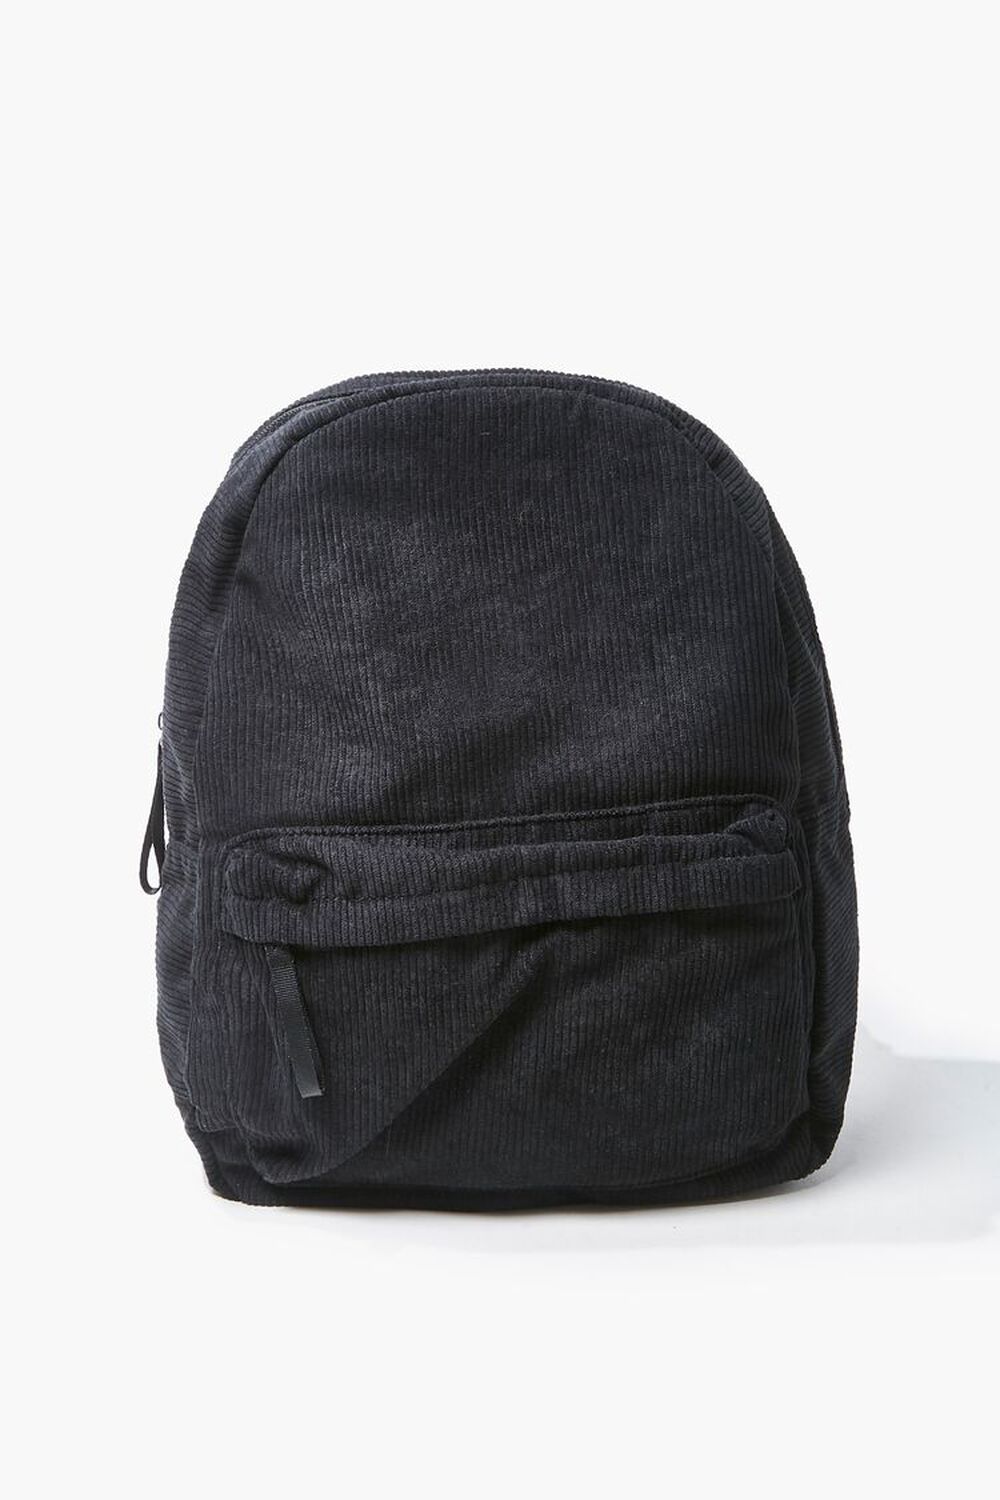 BLACK Corduroy Zippered Backpack, image 1